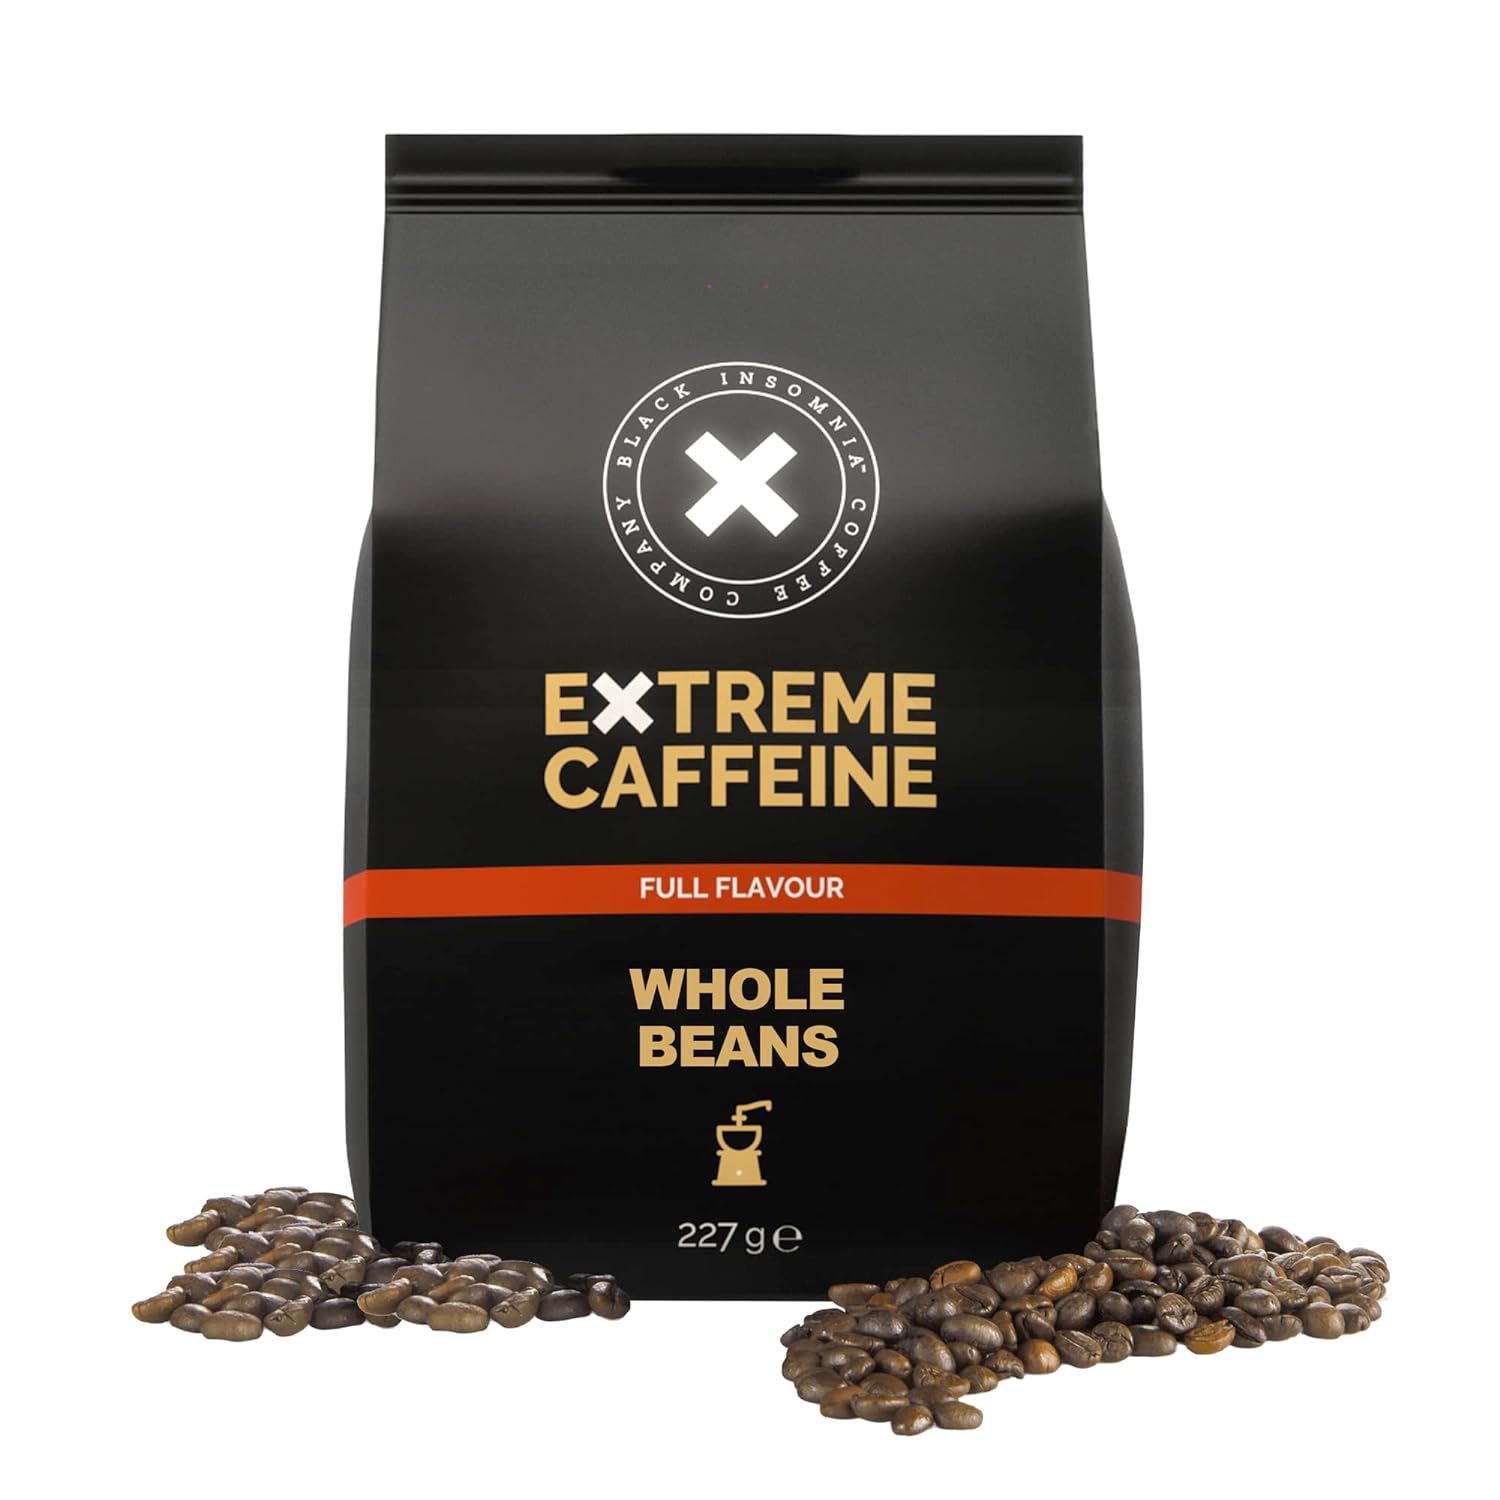 Black Insomnia Coffee Beans Extra Strong I 1105mg Caffeine Per Cup - World's Strongest Coffee I 100% Robusta Espresso Beans I Low Acid Coffee I Flavor: Full, Dark Roast, 1 x 227g
